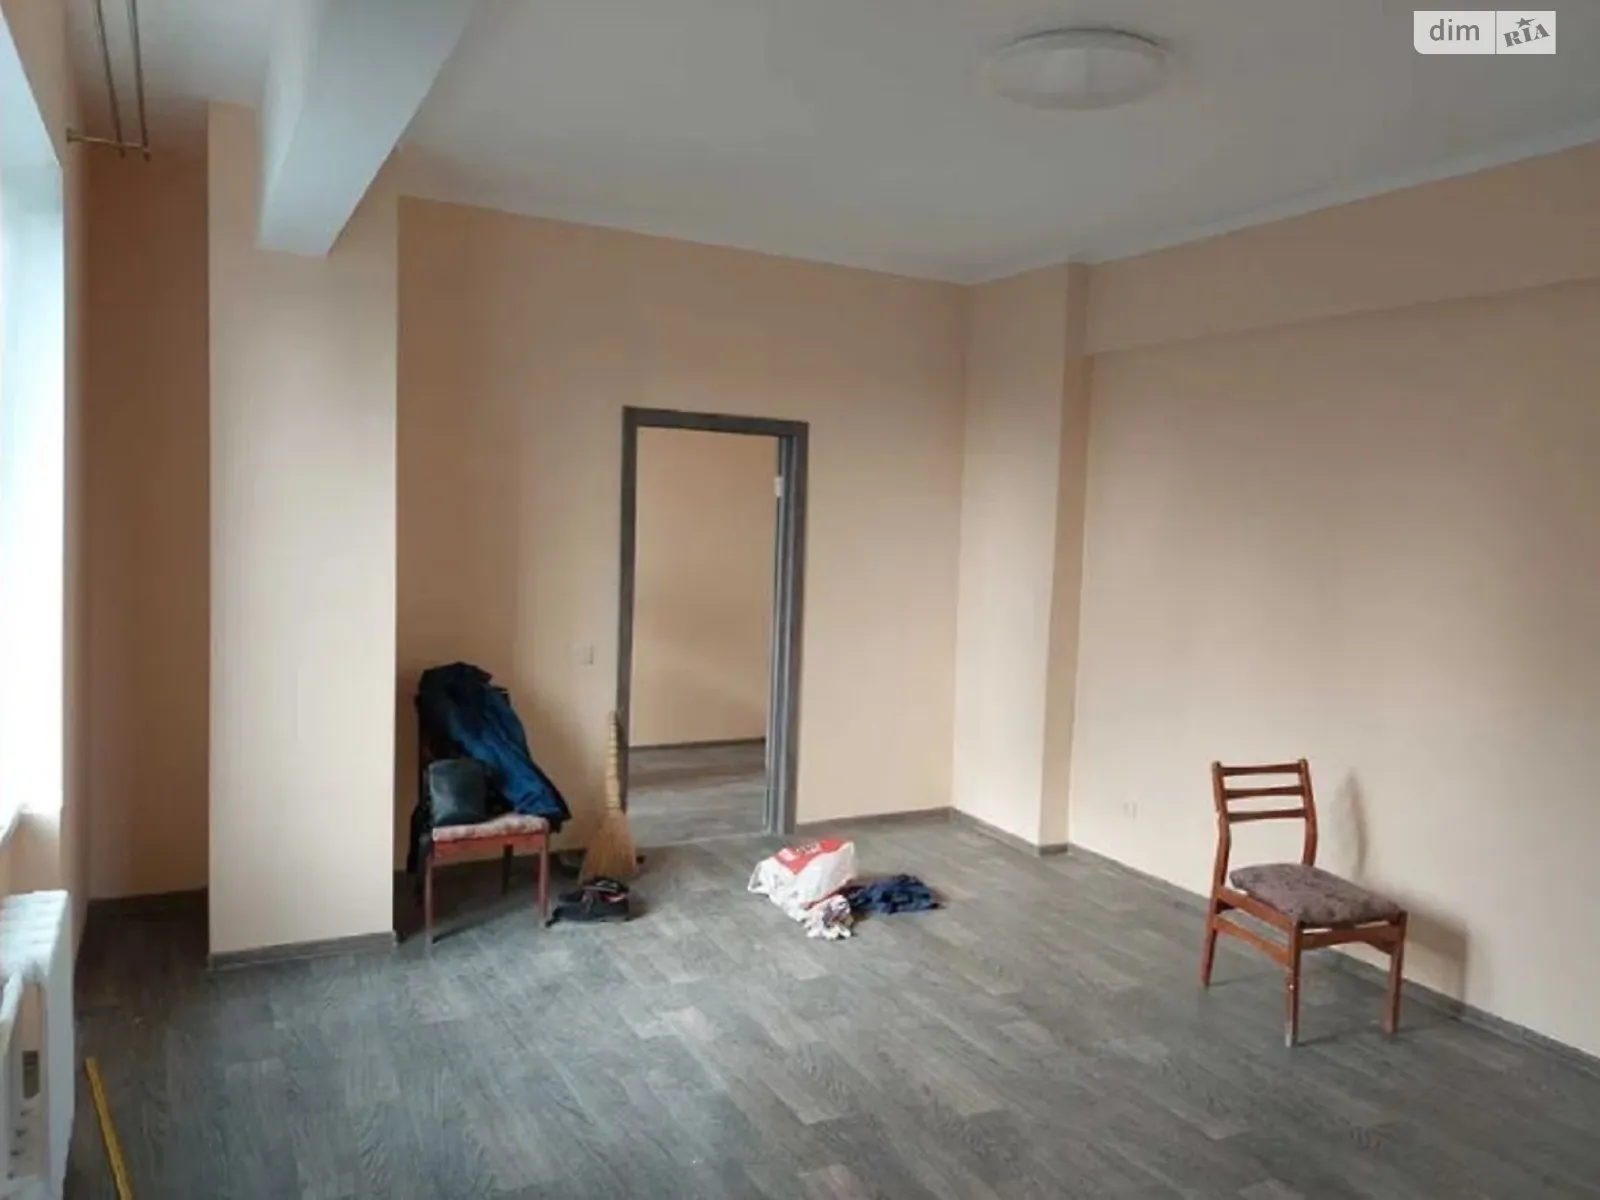 Продается комната 33 кв. м в Одессе, цена: 12000 $ - фото 1